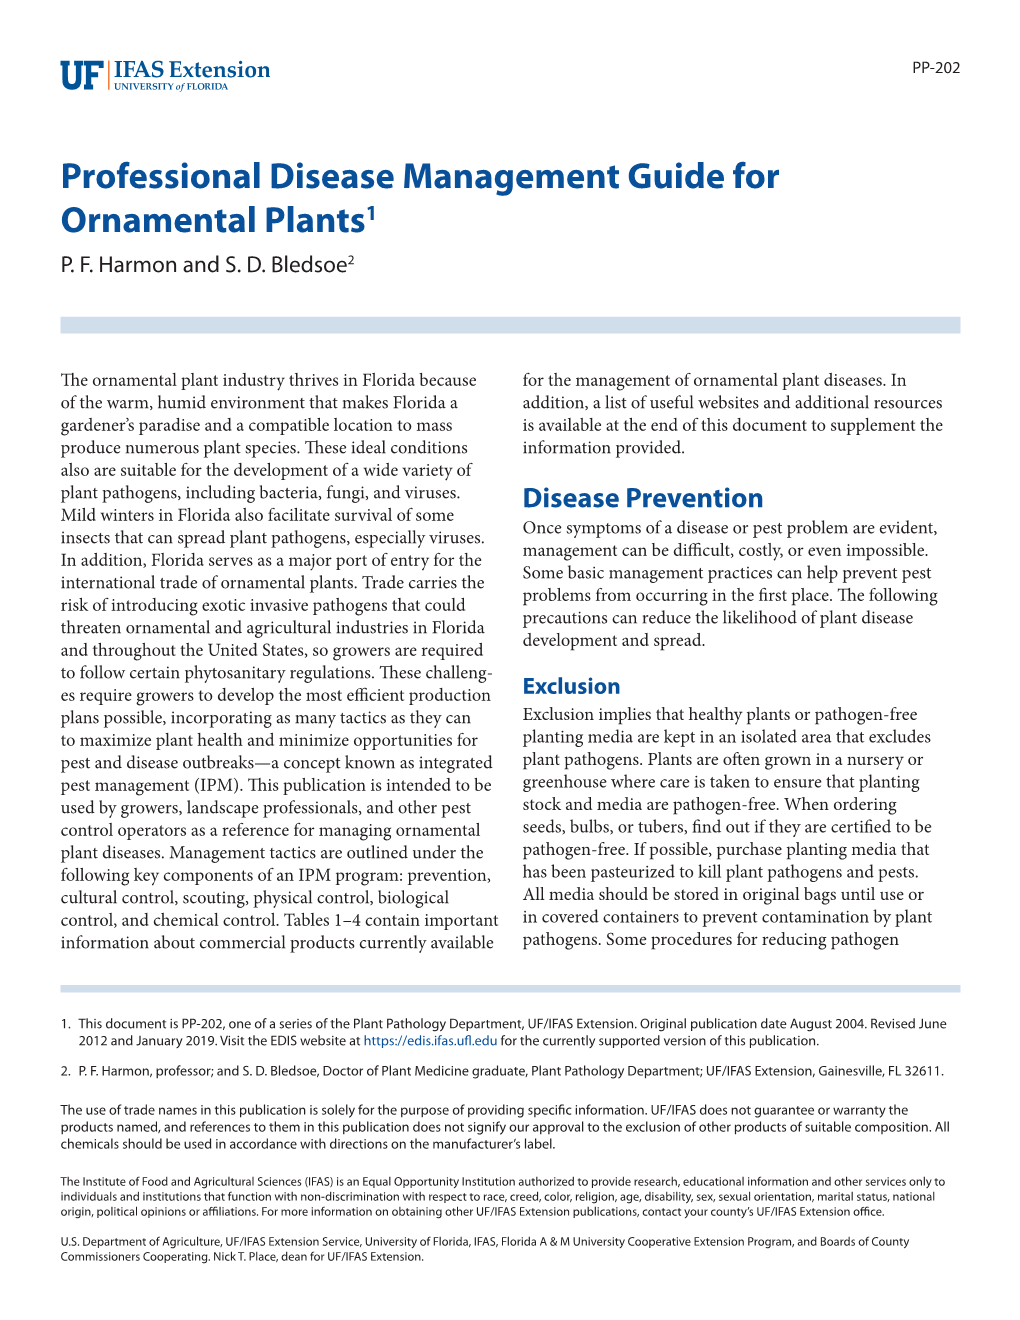 Professional Disease Management Guide for Ornamental Plants1 P